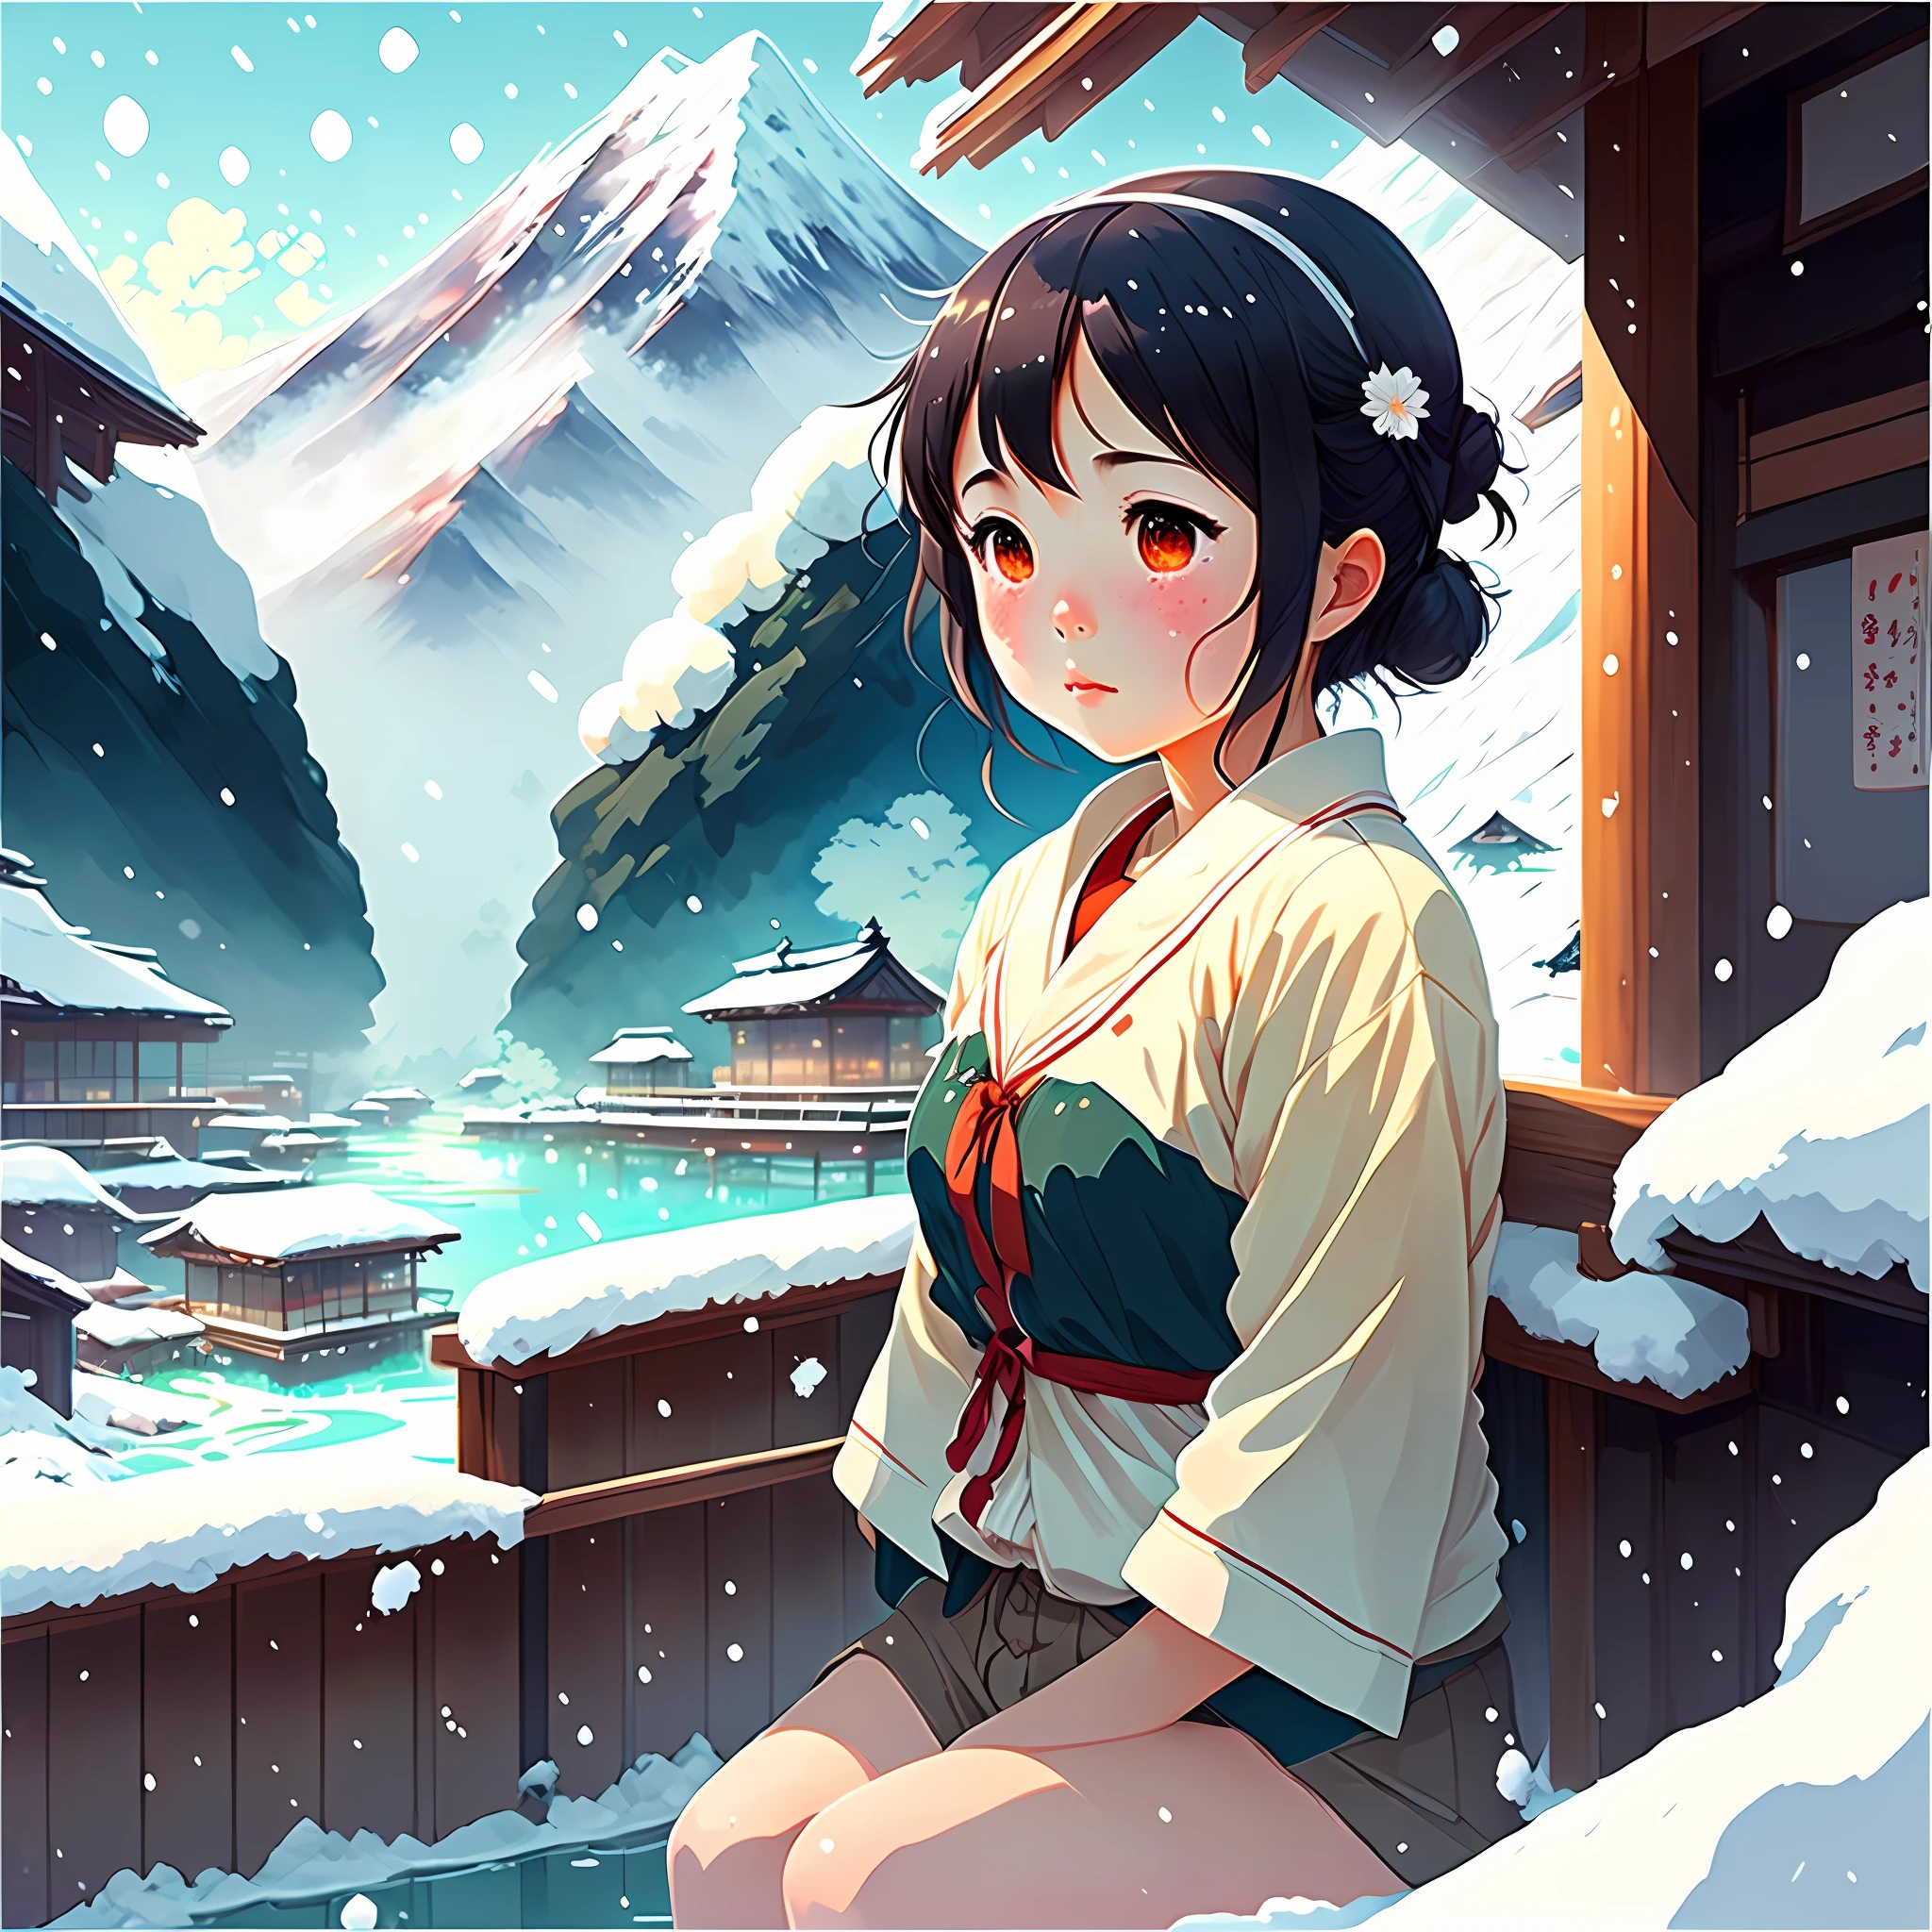 Beautiful and cute girl，hot onsen，weeping，SakuraNS，snow mountainakoto Shinkai painting style